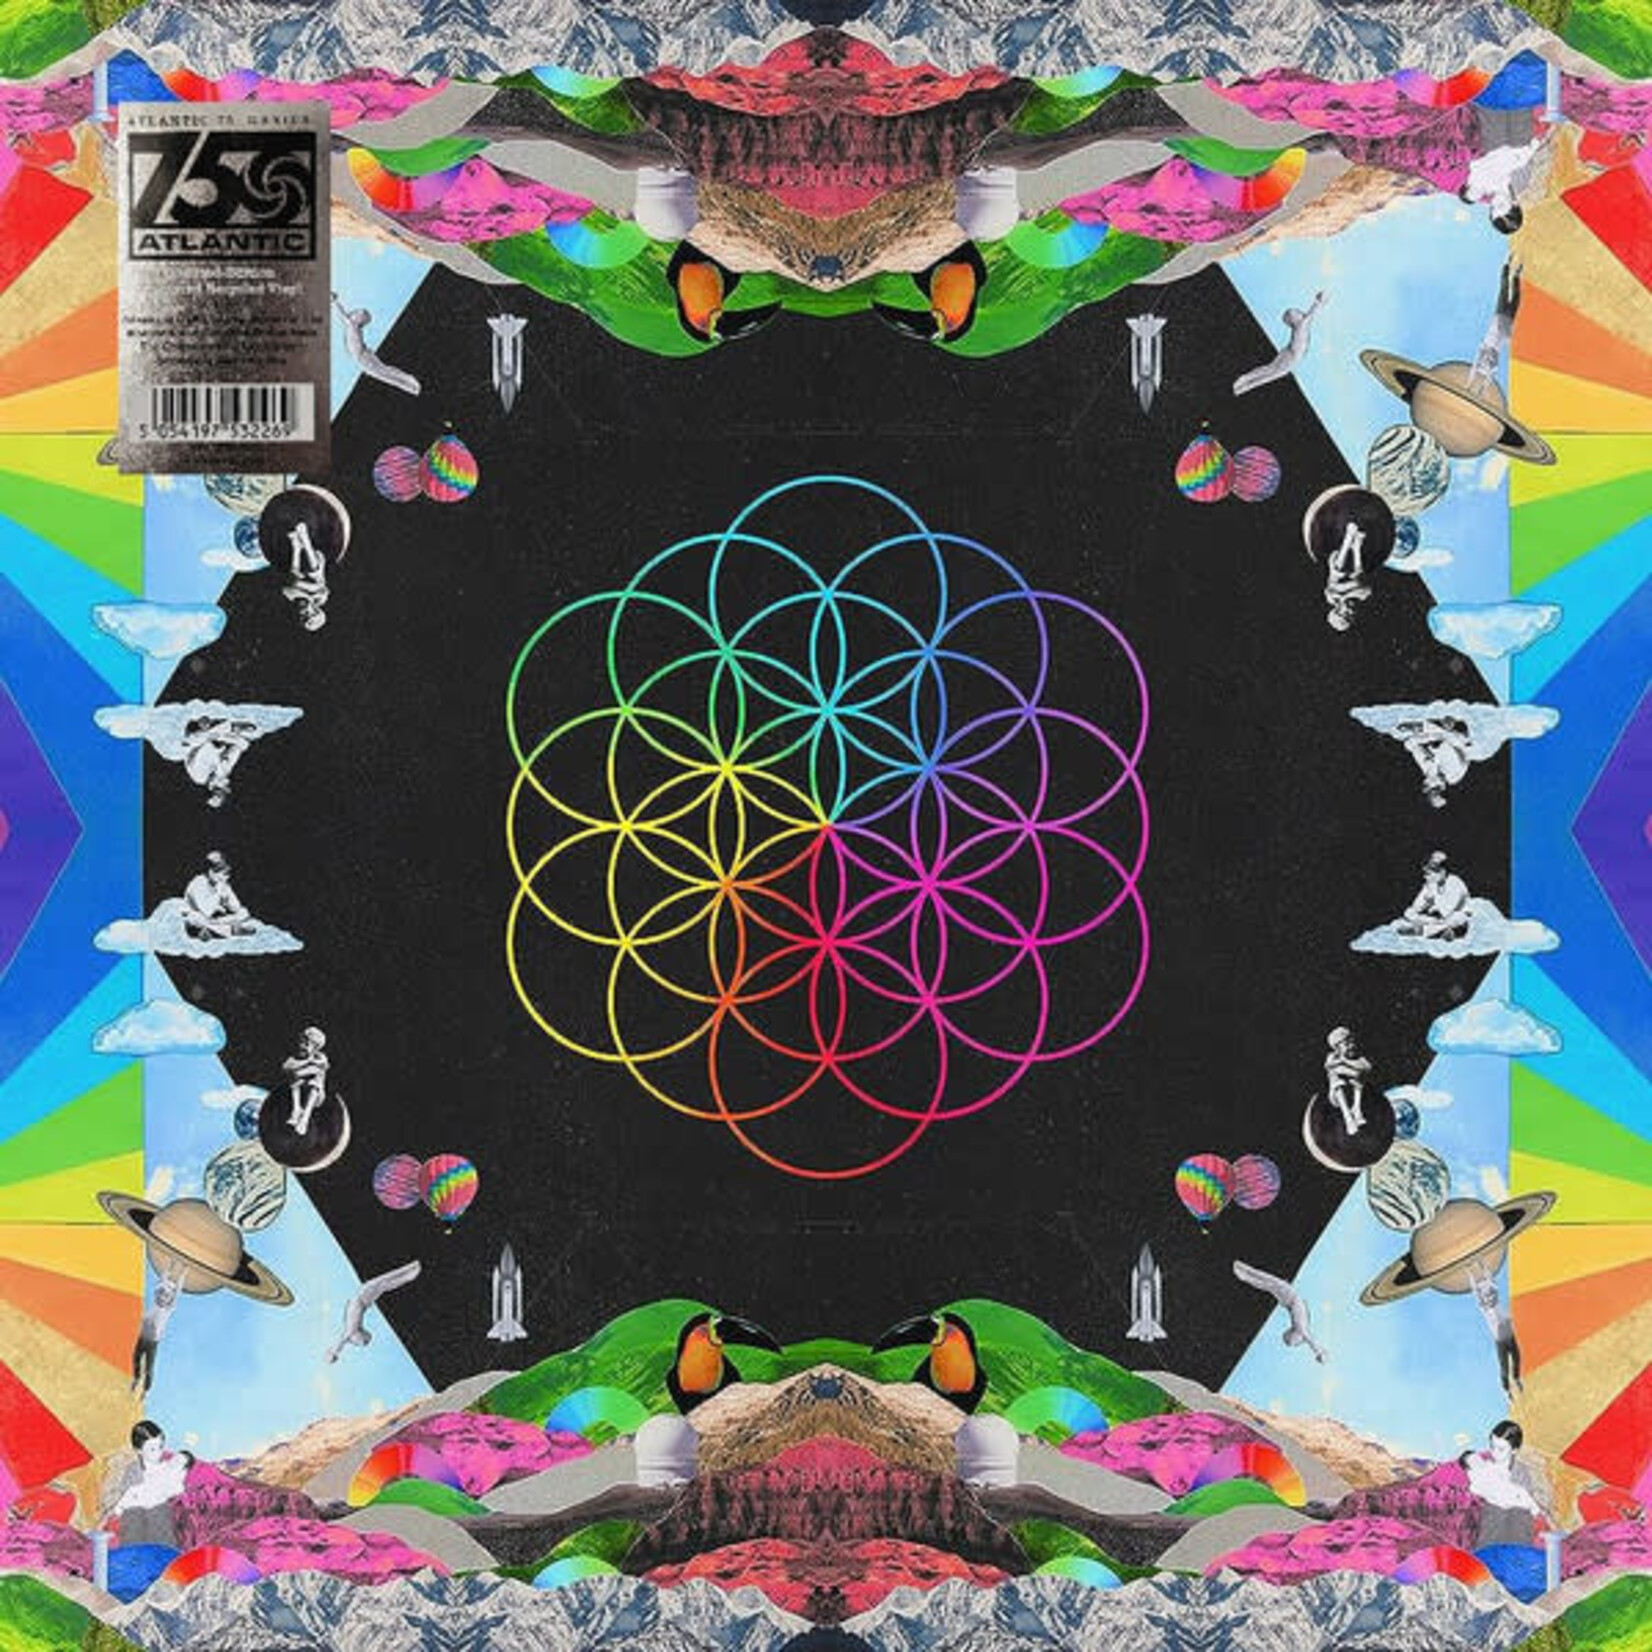 [New] Coldplay - A Head Full Of Dreams (Atlantic 75th, colored recycled vinyl w/bonus track)